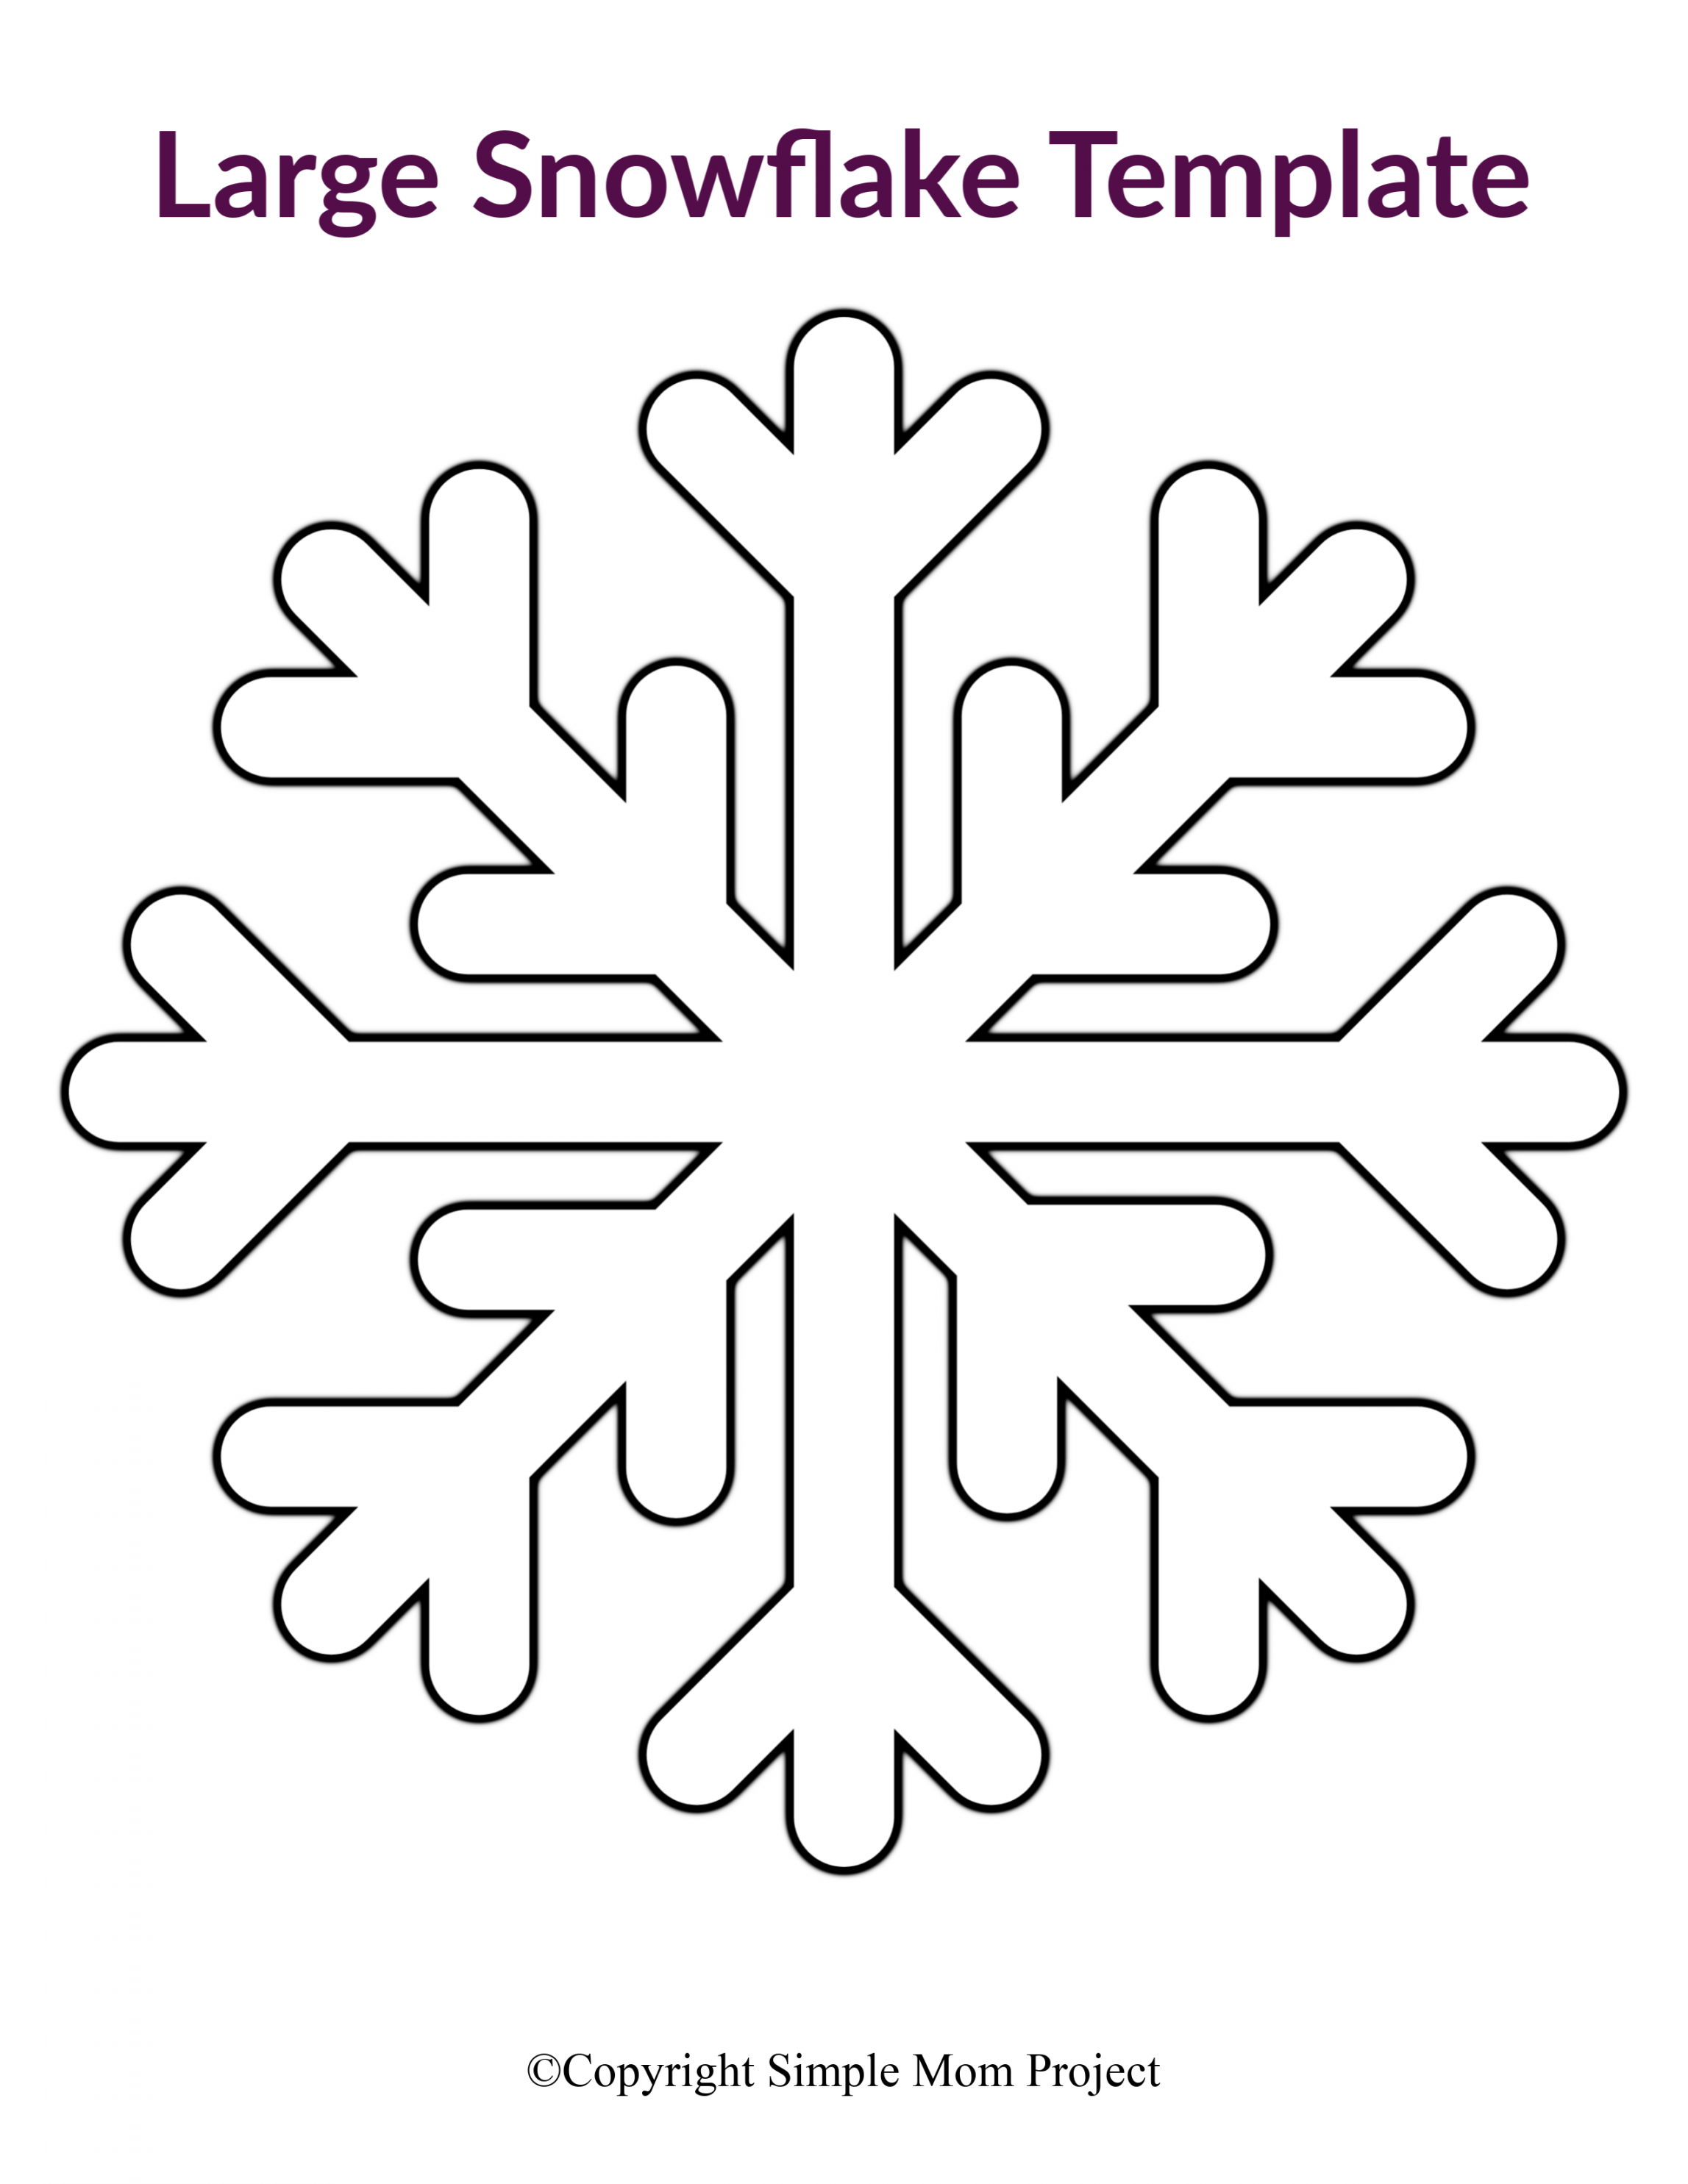 Free Printable Large Snowflake Templates - Simple Mom Project - FREE Printables - Snowflake Printout